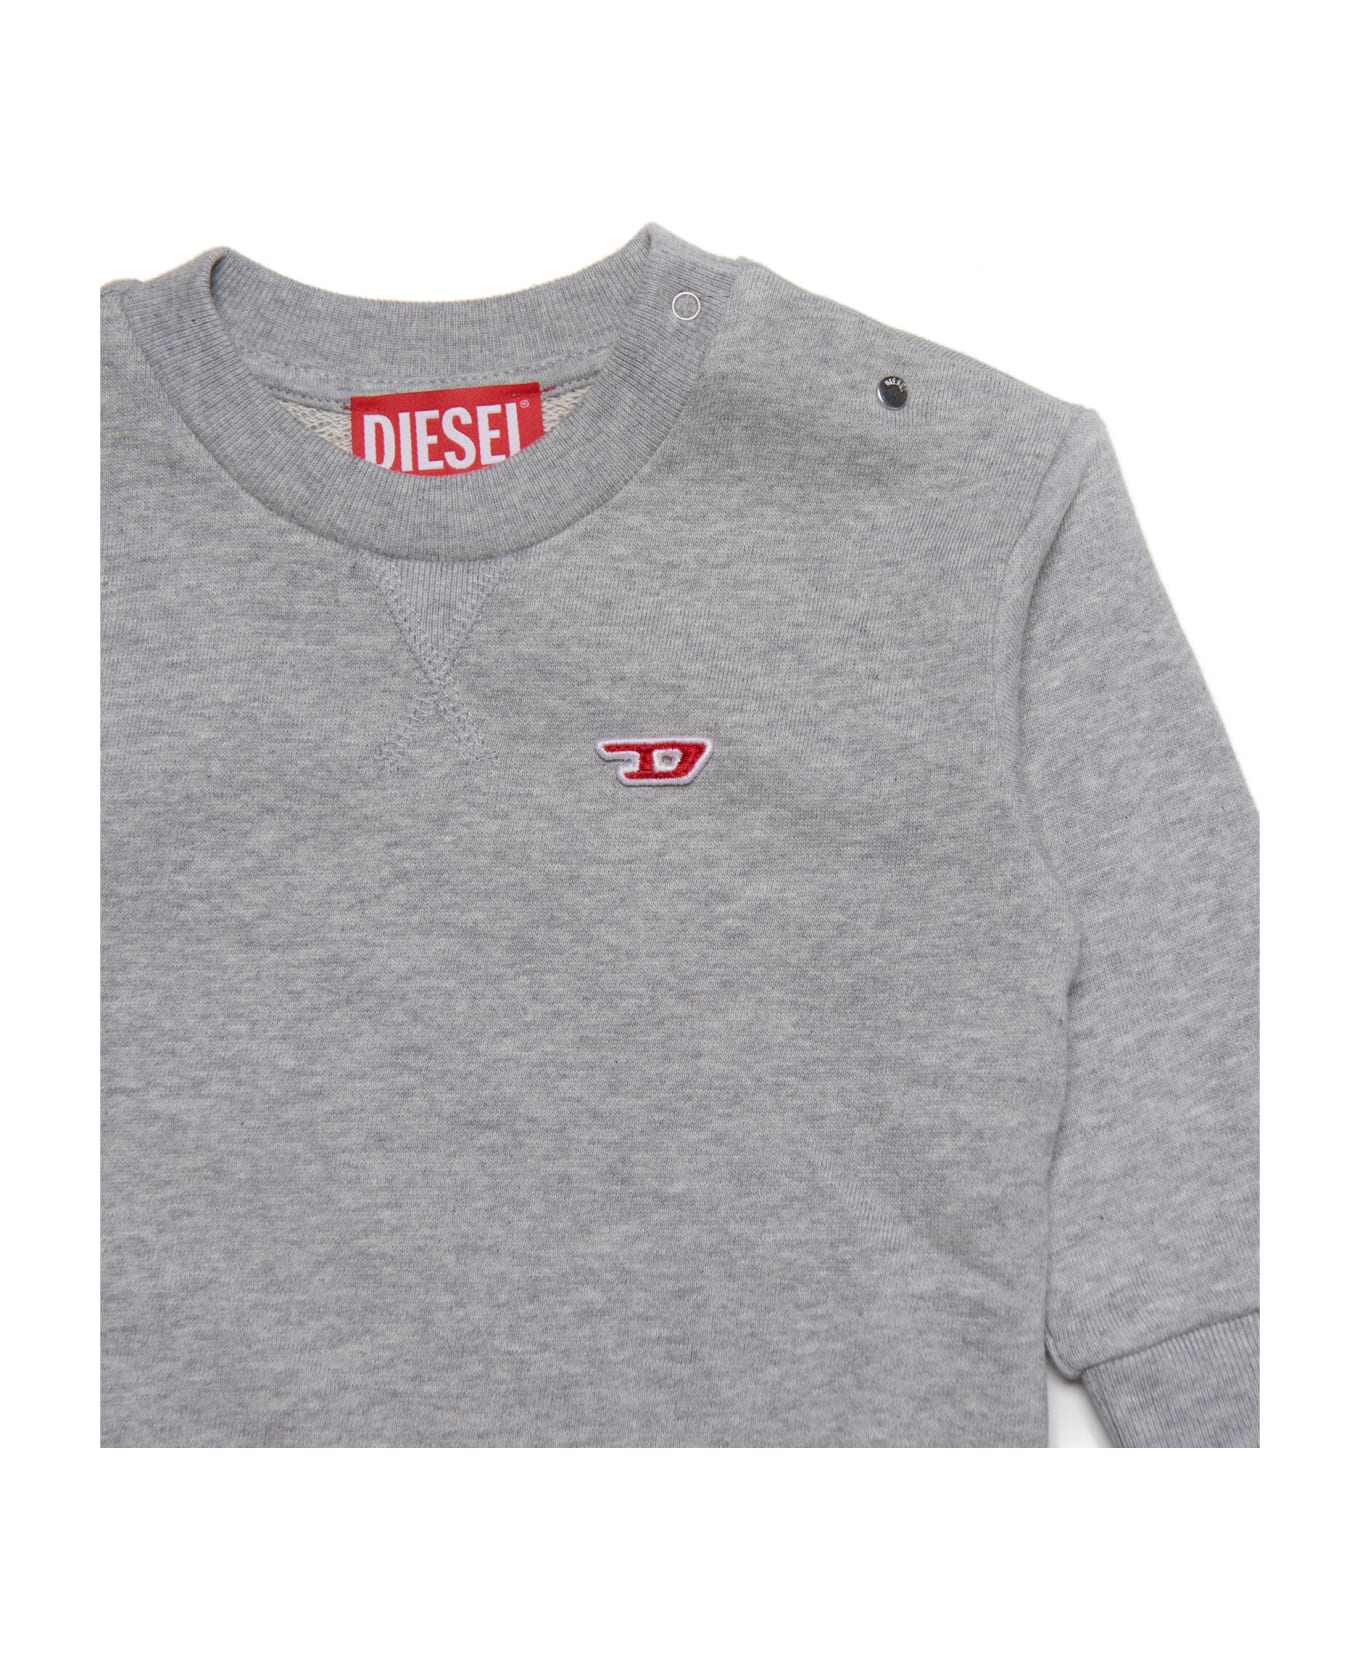 Diesel Sconfb Sweat-shirt Diesel Gray Cotton Crewneck Sweatshirt With Logo D - Grey melange